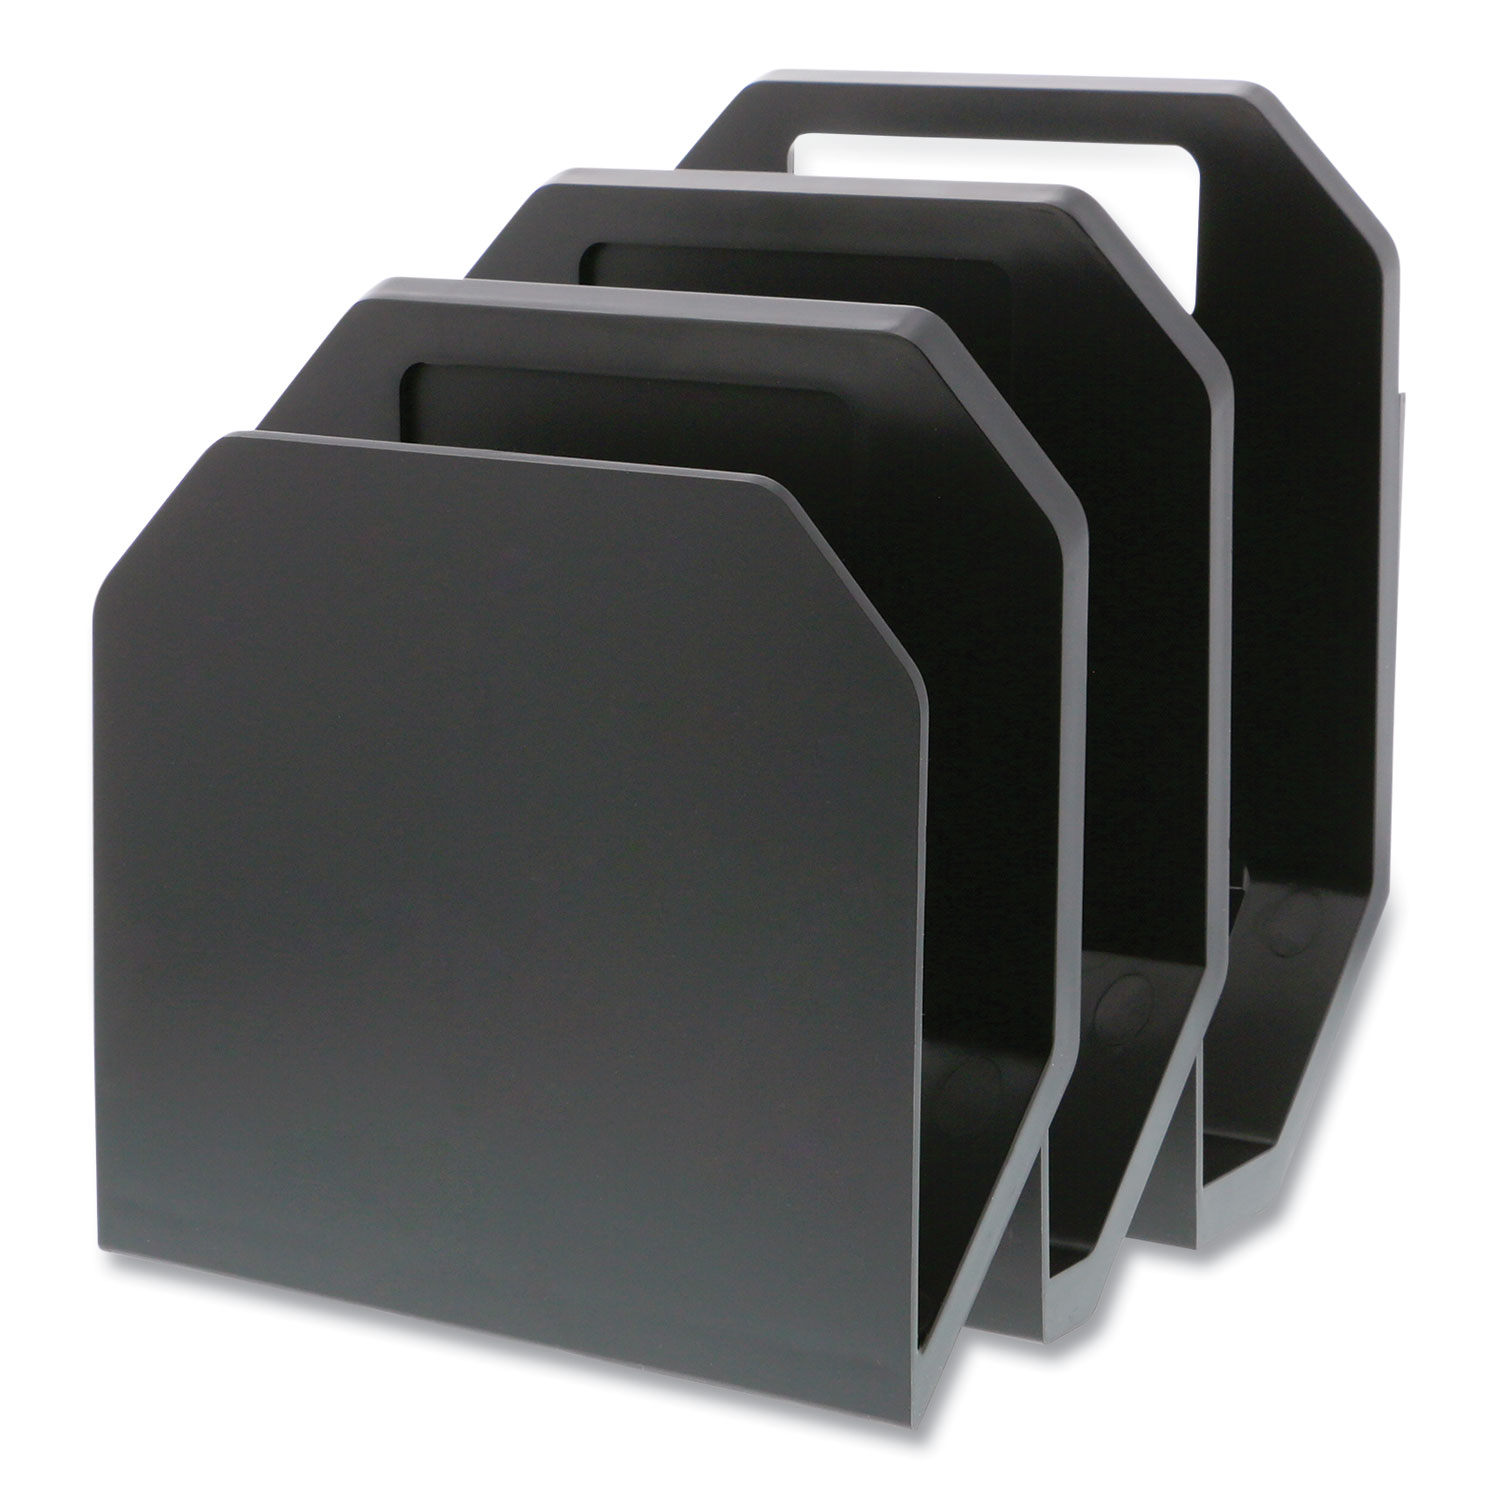  Bostitch KT-3FOLDER-BLK Konnect File Organizer, 3 Sections, Letter Size Files, 7.25 x 4 x 9.25, Black (BOS24340005) 